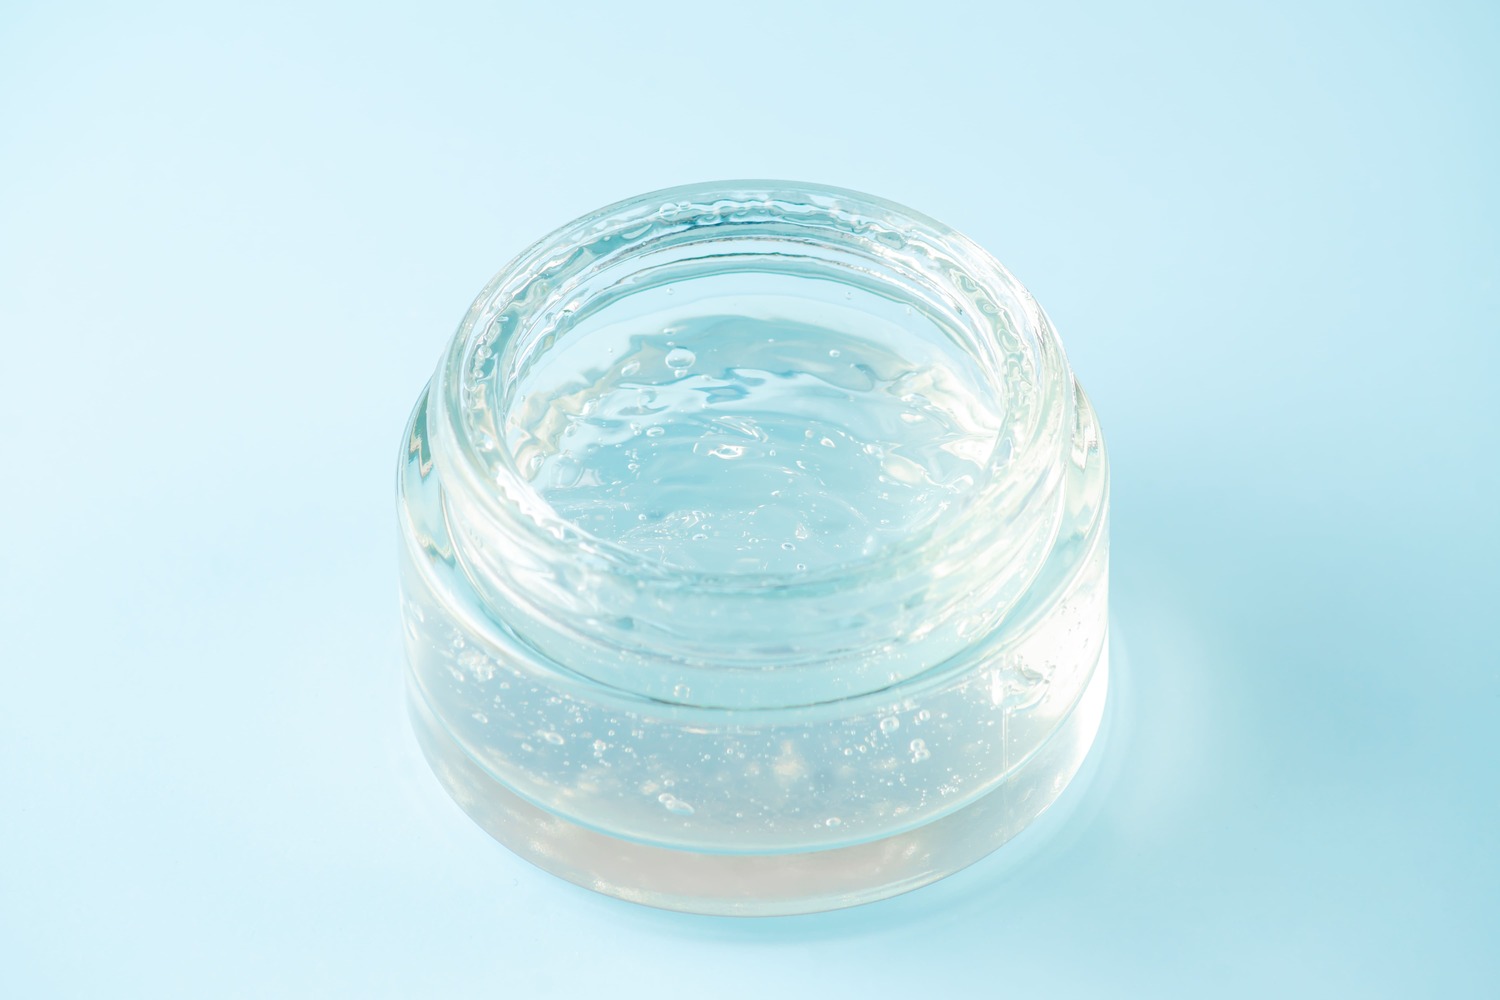 transparent-gel-jar-on-blue-background-cosmetic-g-2022-08-01-05-10-04-utc-1-1-1.jpg